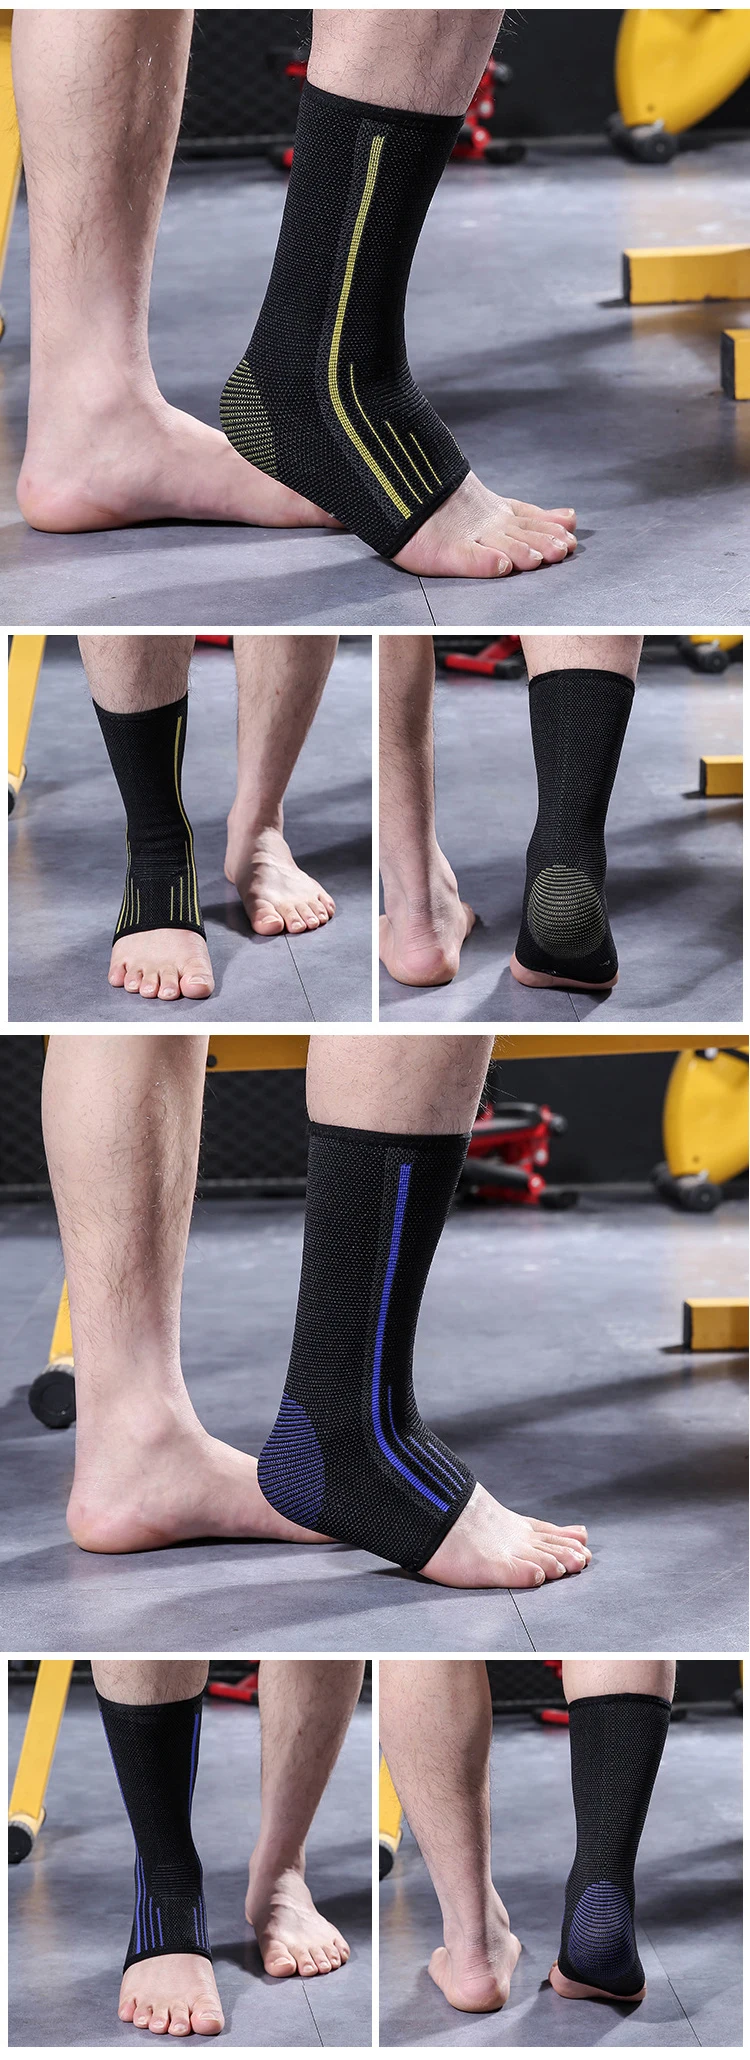 Enerup Branded Logo Adjustable Cotton Sports Running Ankle Athletic Brace Sleeve Supports Socks For Women Men